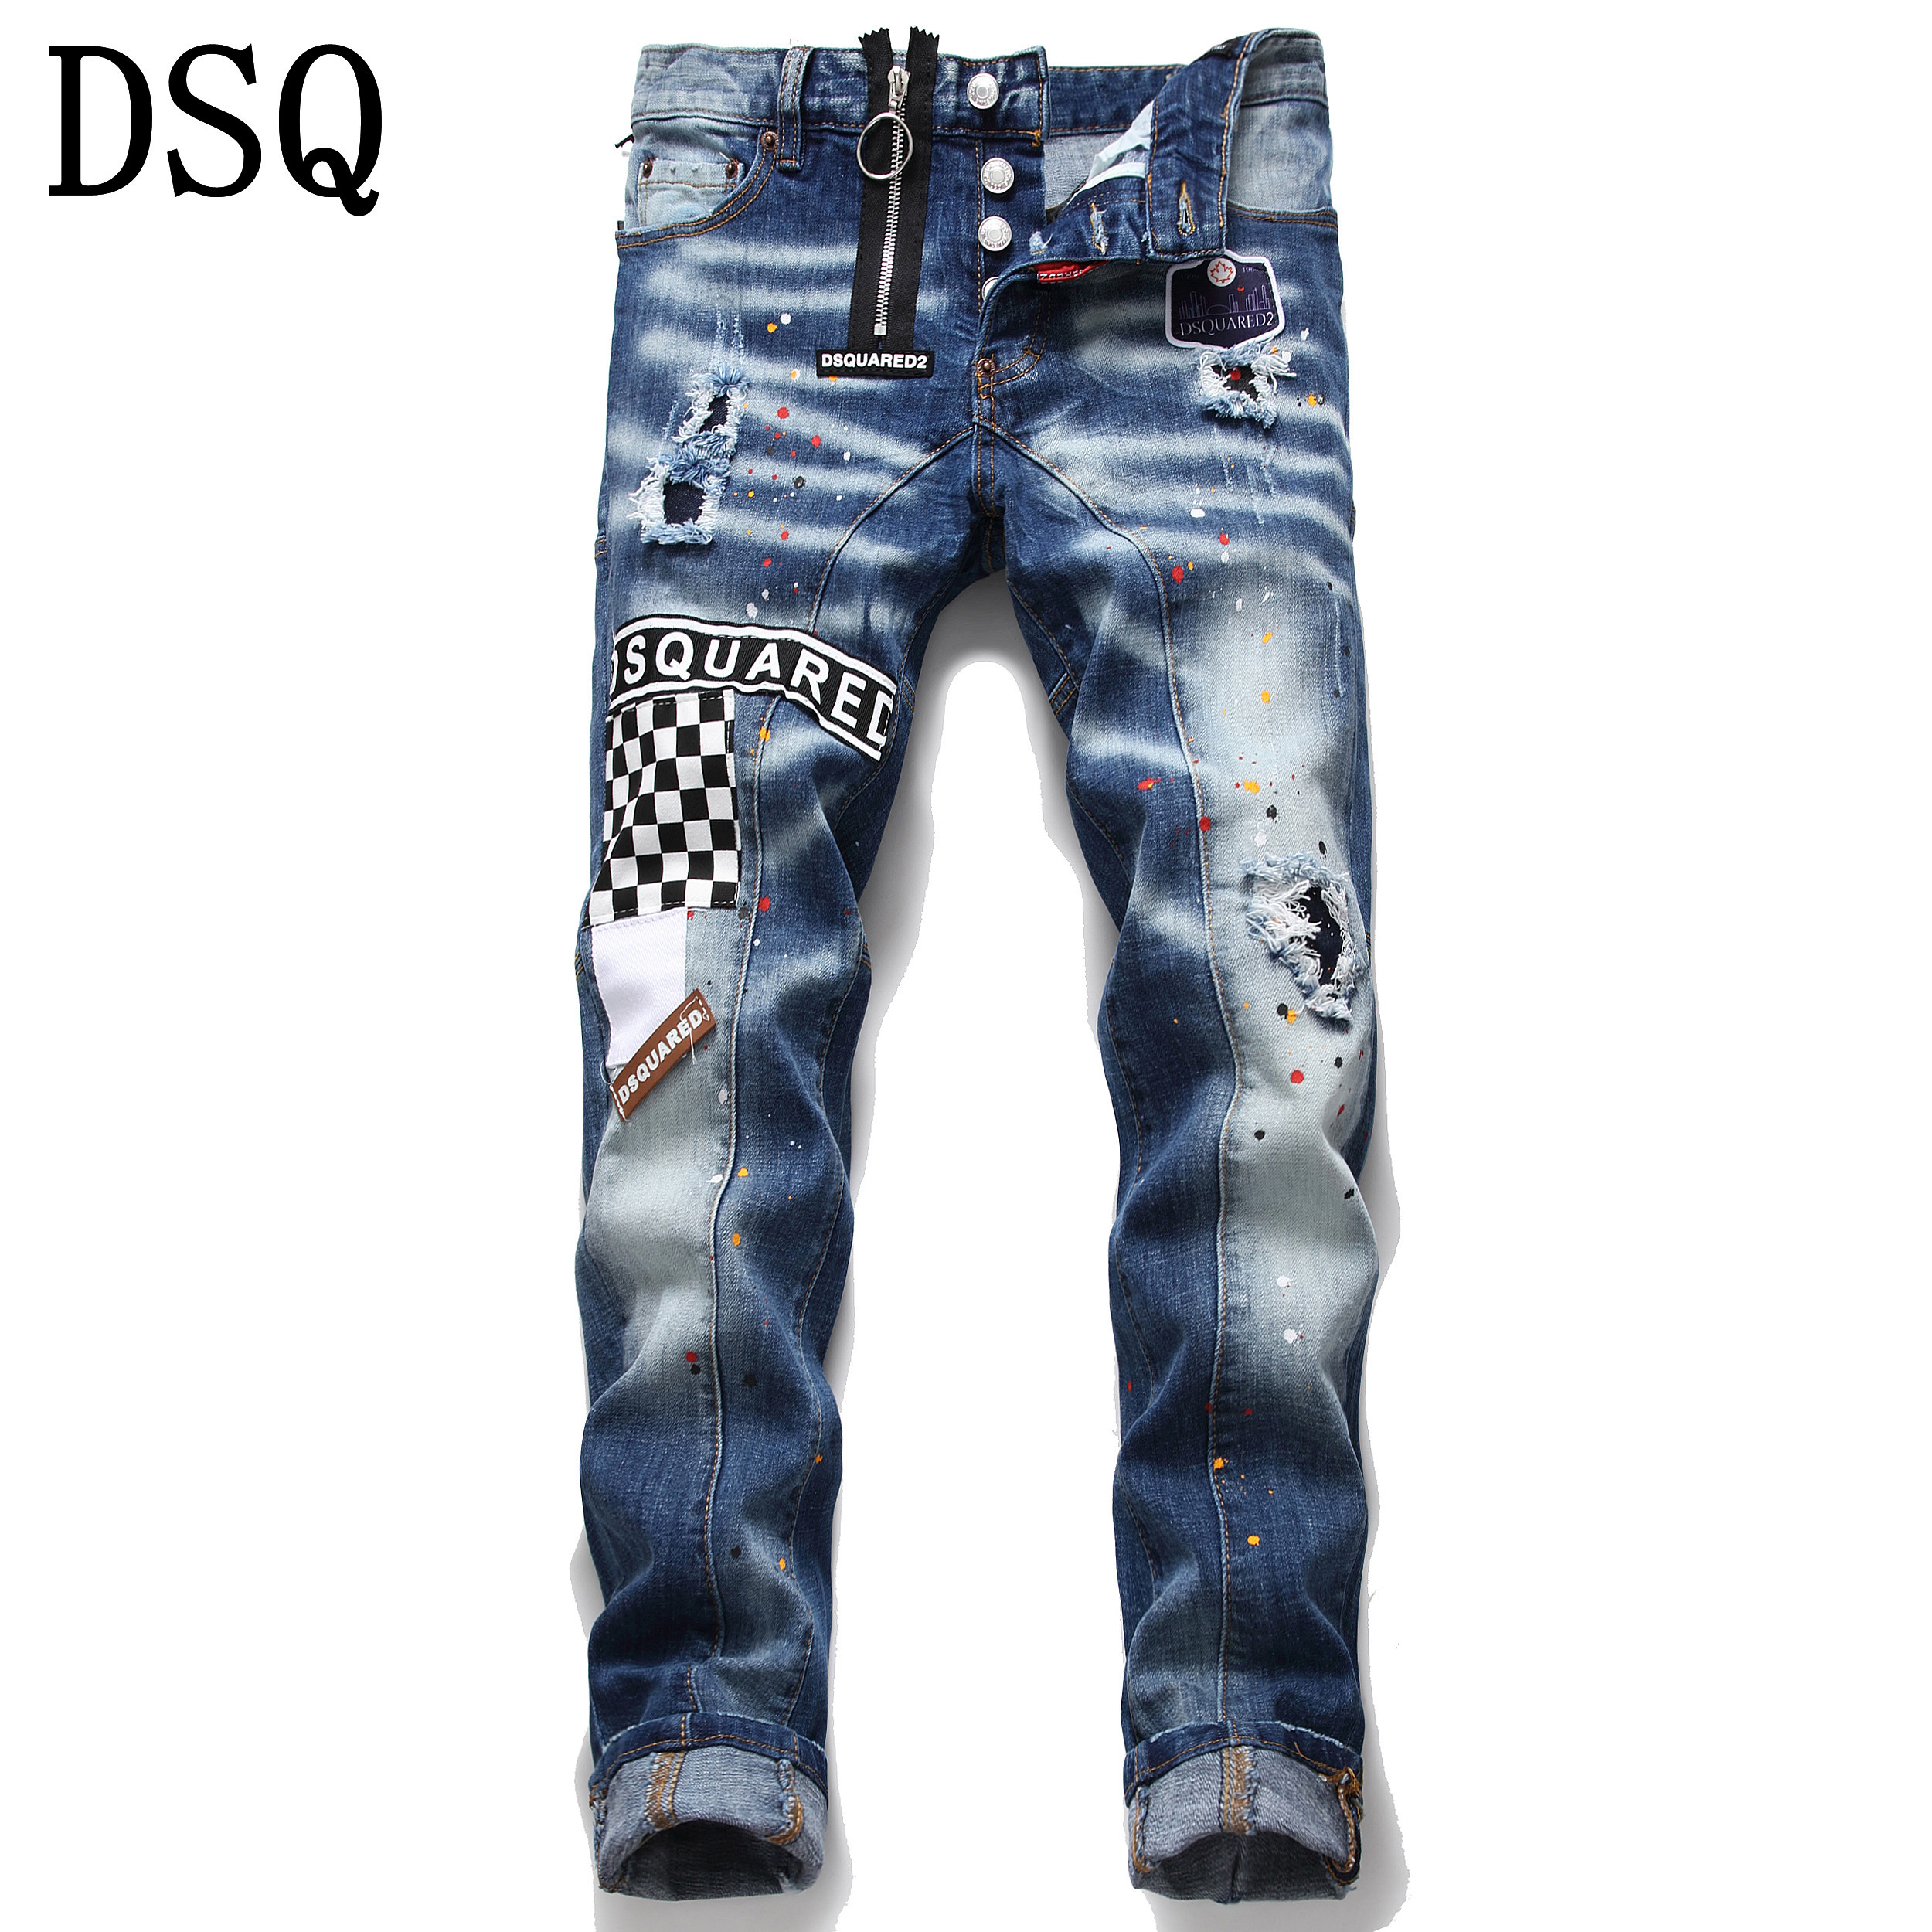 size 32 dsquared jeans mens